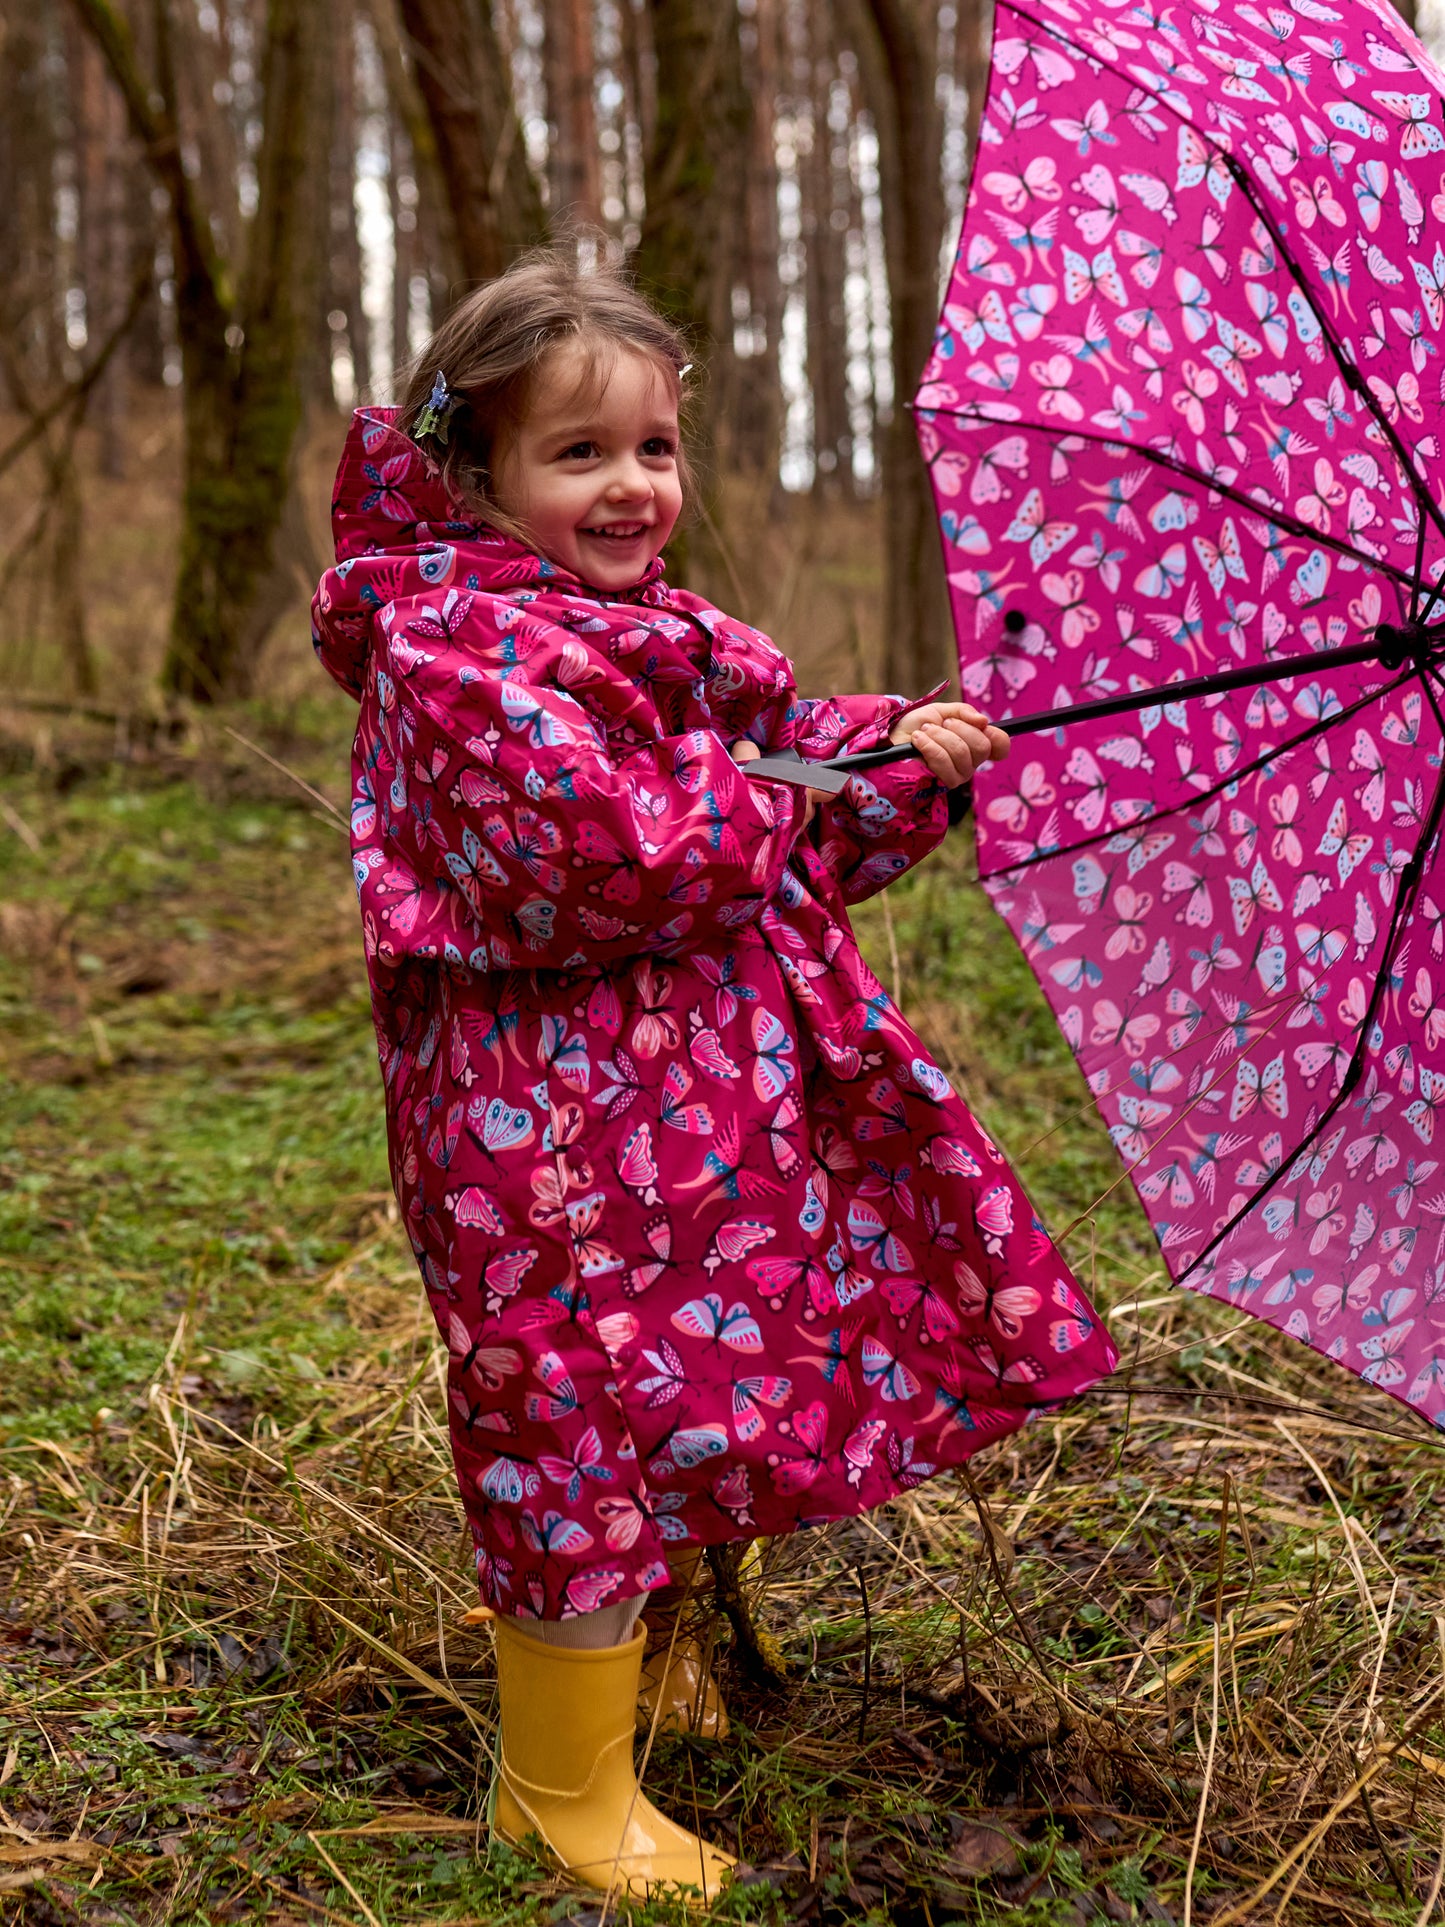 Kids' Raincoat Pink Butterflies